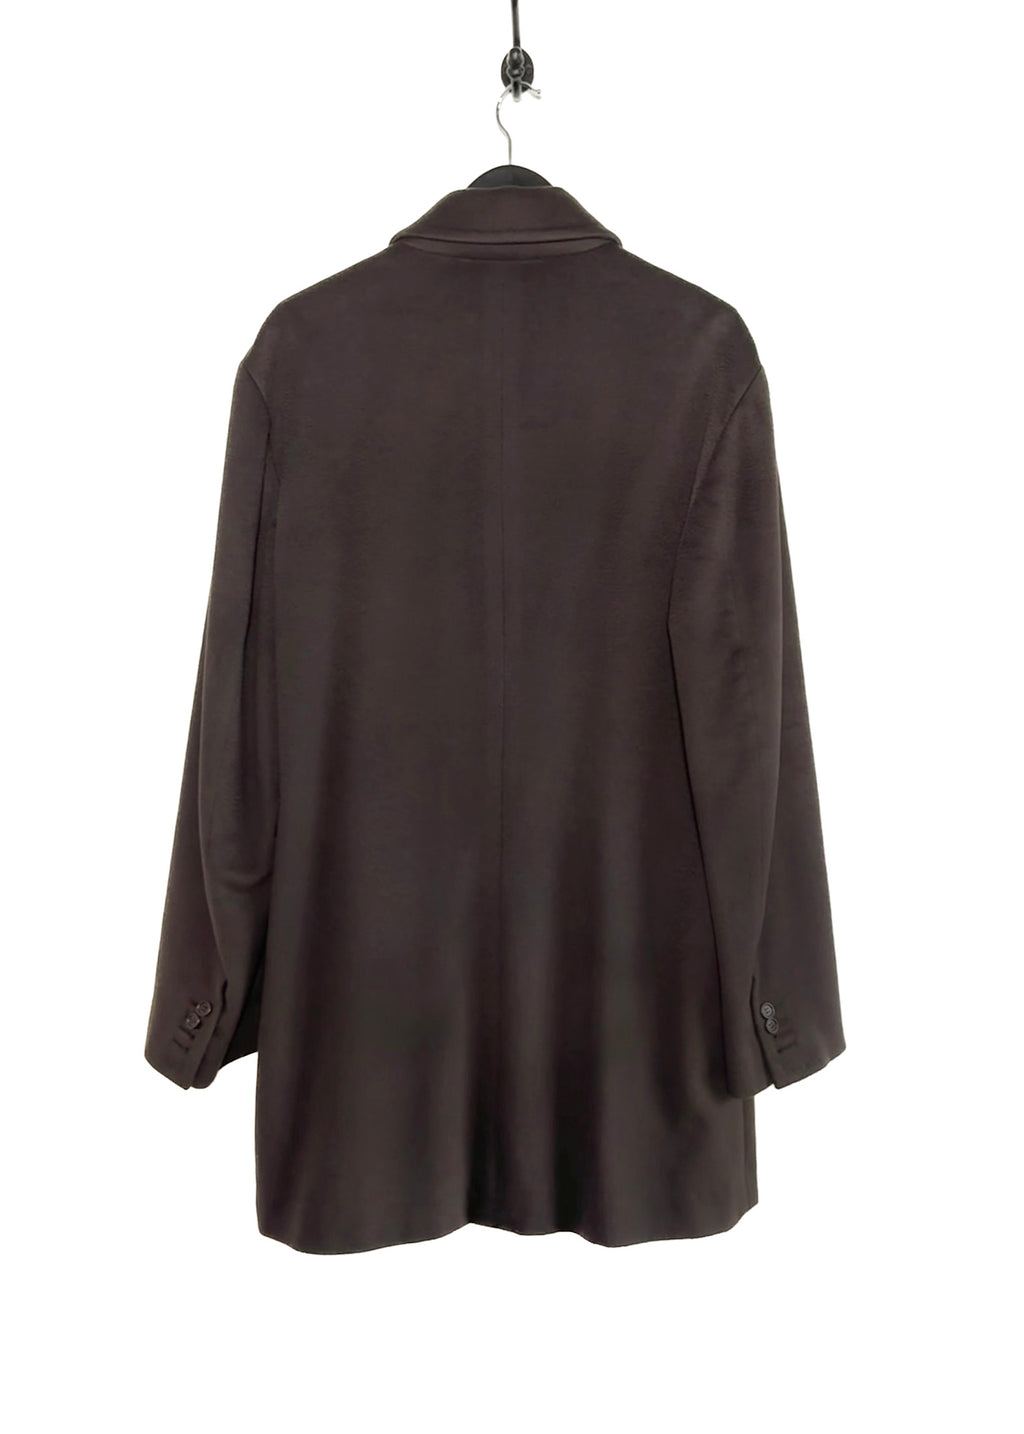 Kiton Brown Cashmere Top Coat